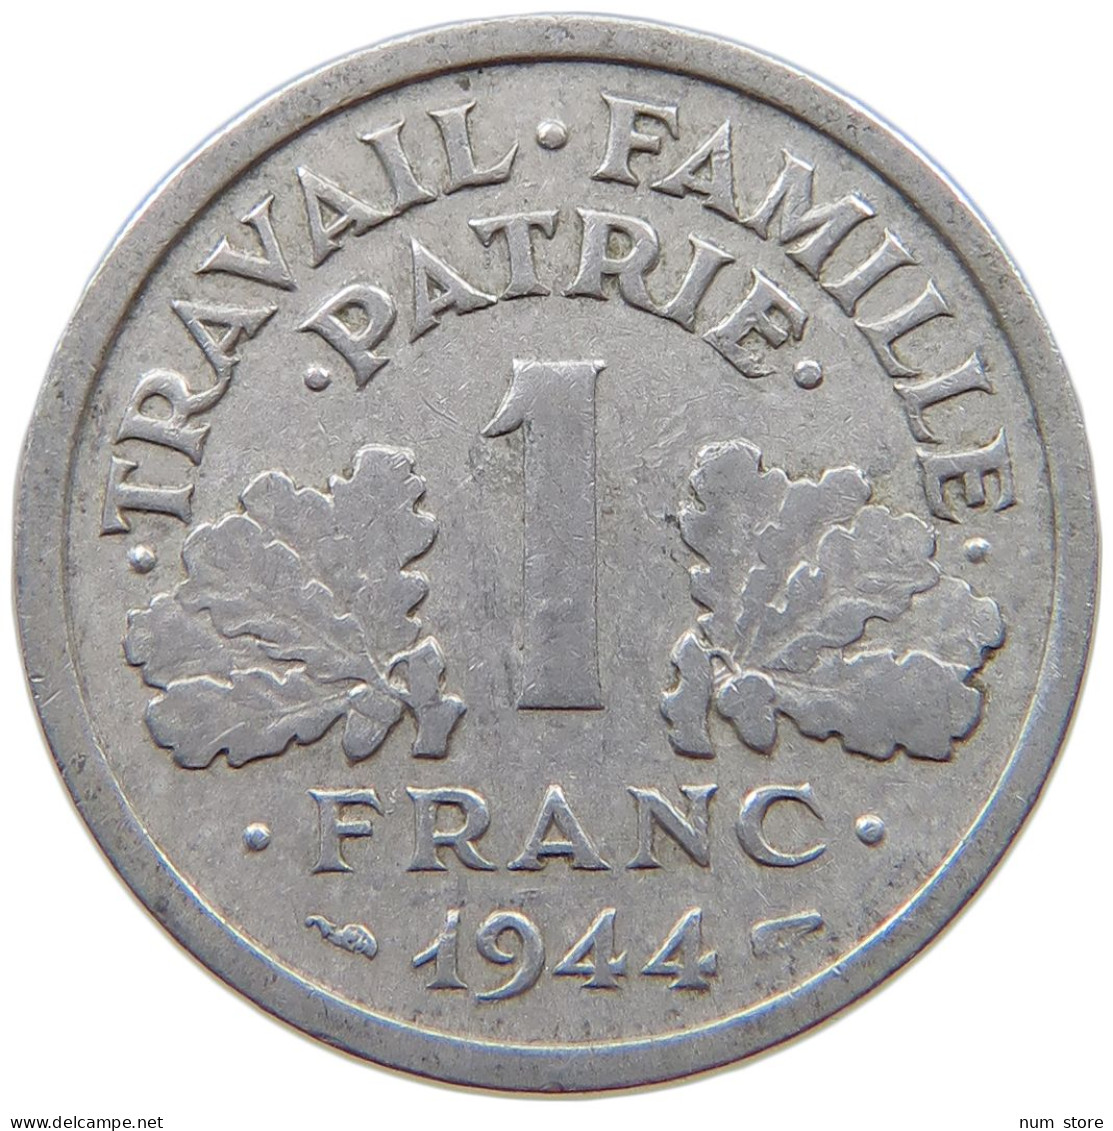 FRANCE 1 FRANC 1944 C #s069 0233 - 1 Franc